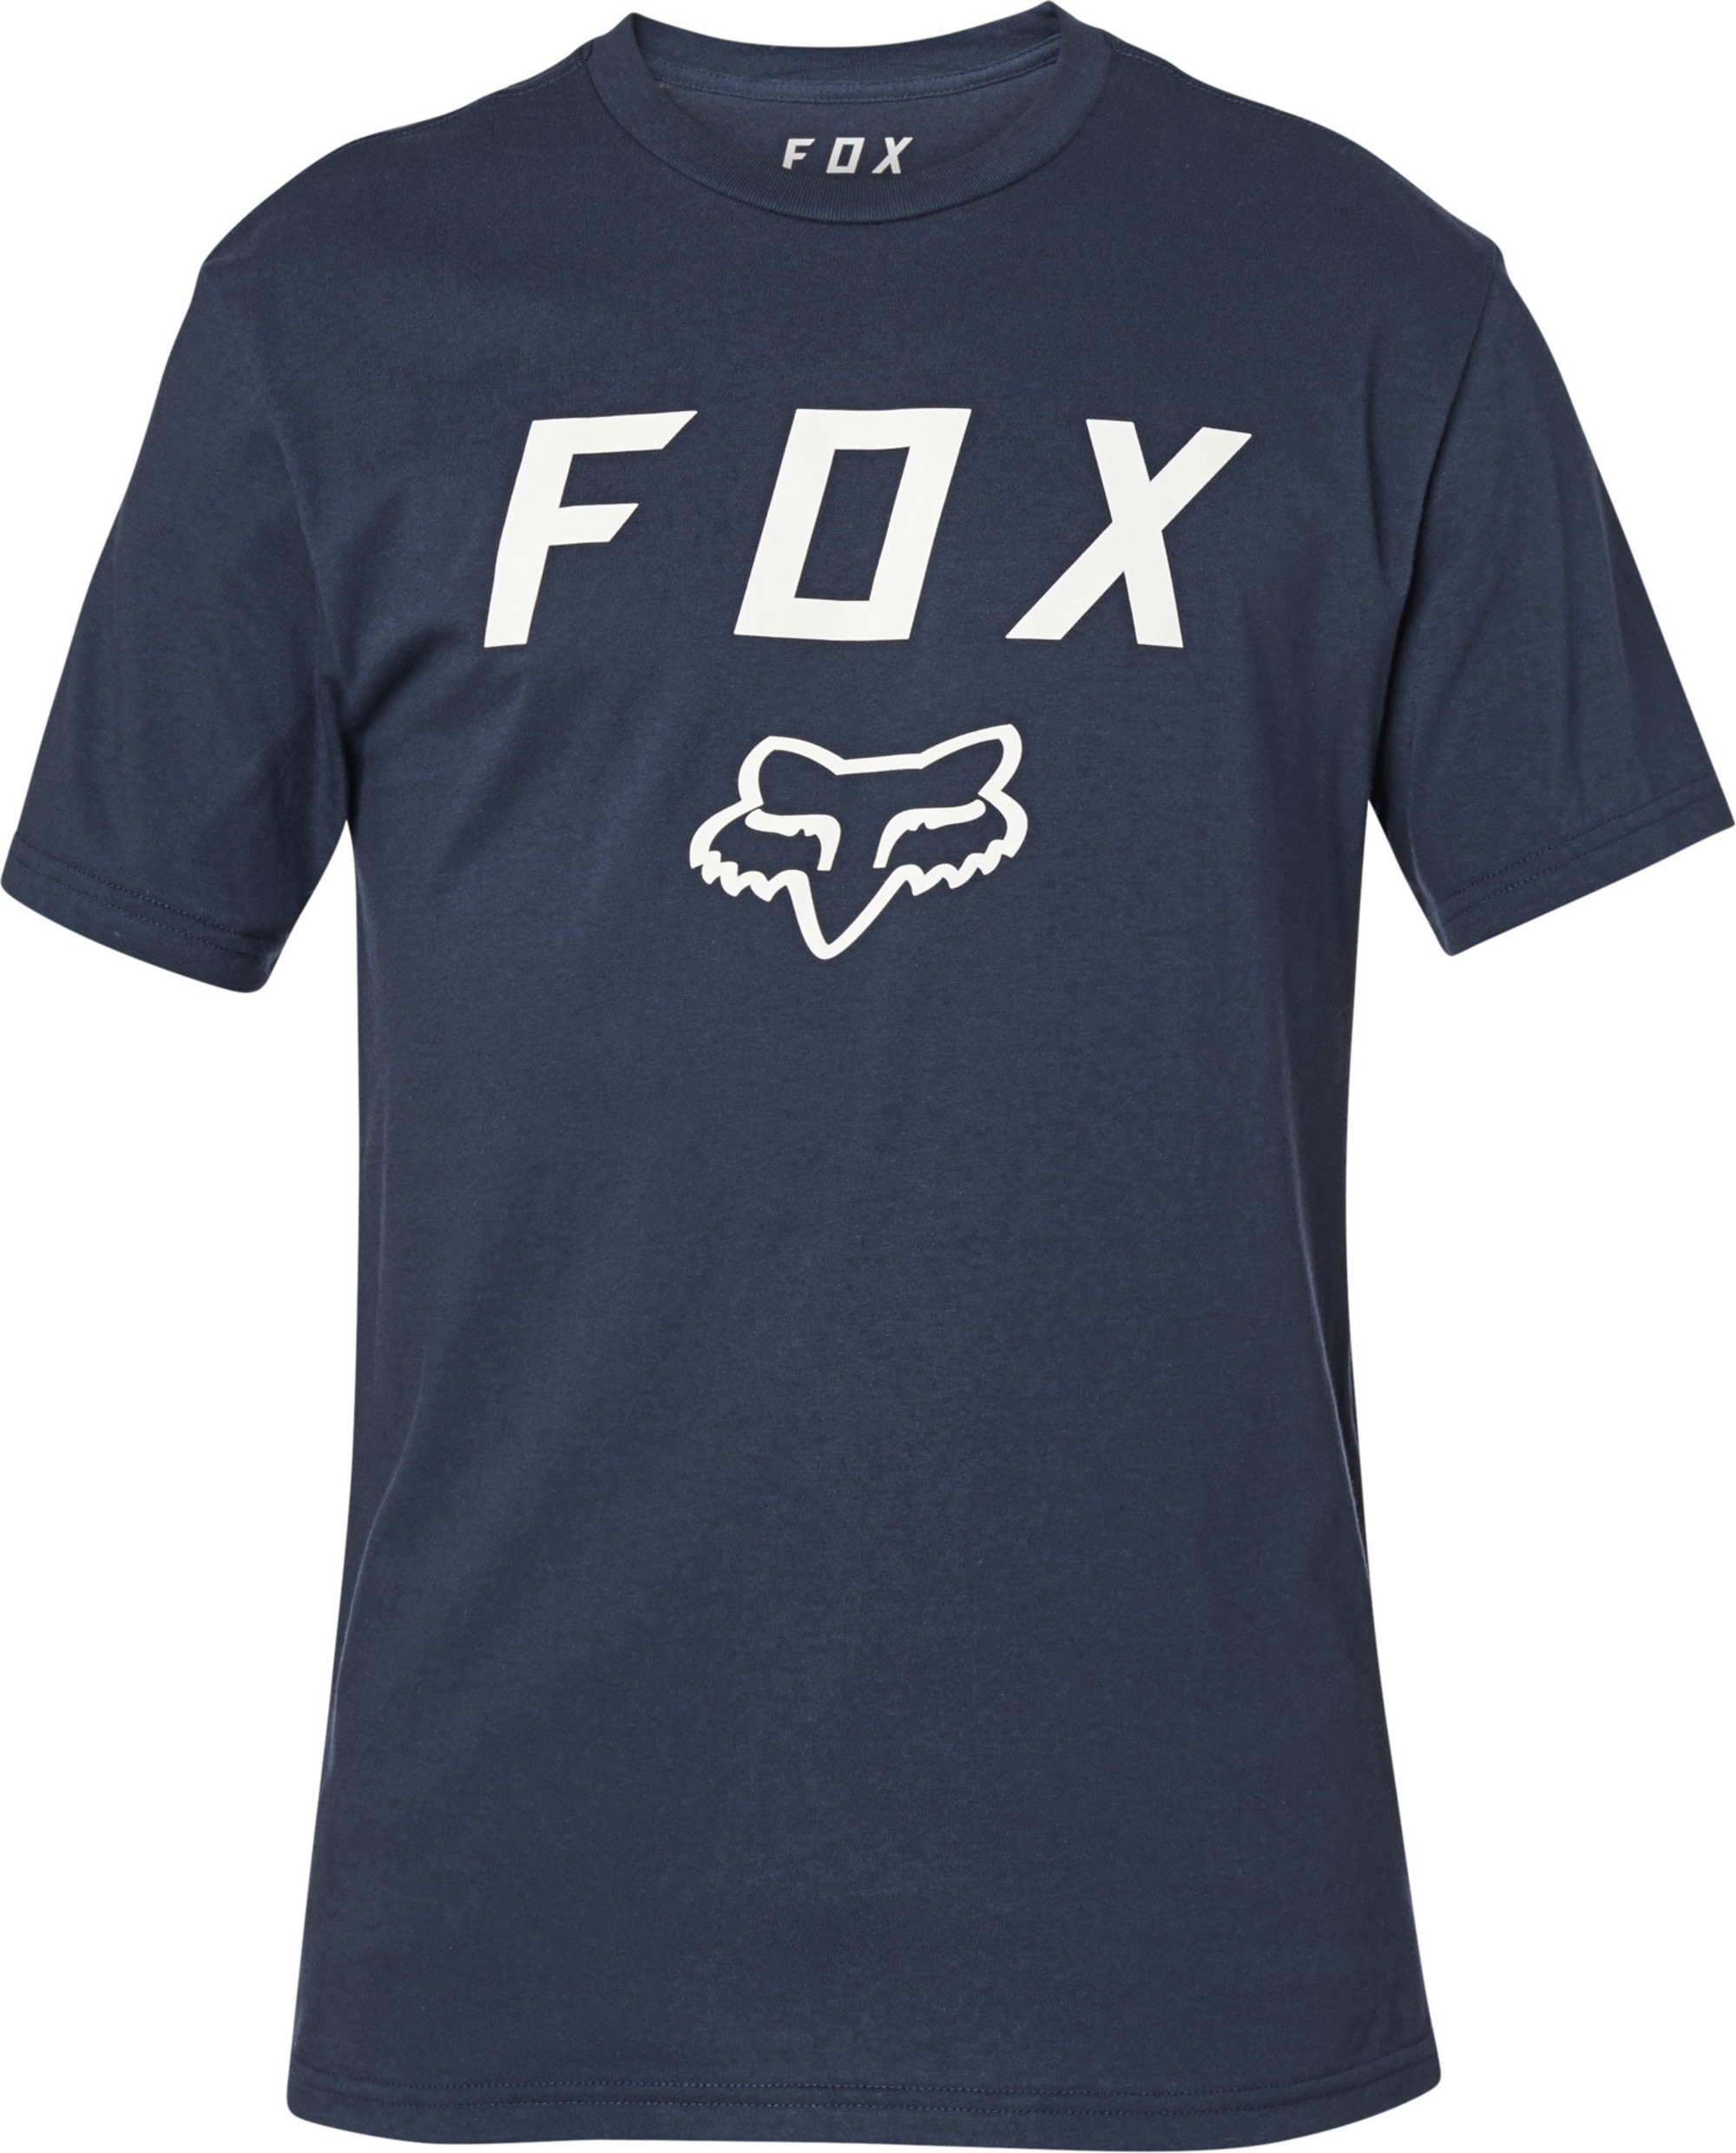 fox racing t-shirt shirts for men legacy moth 34 xl